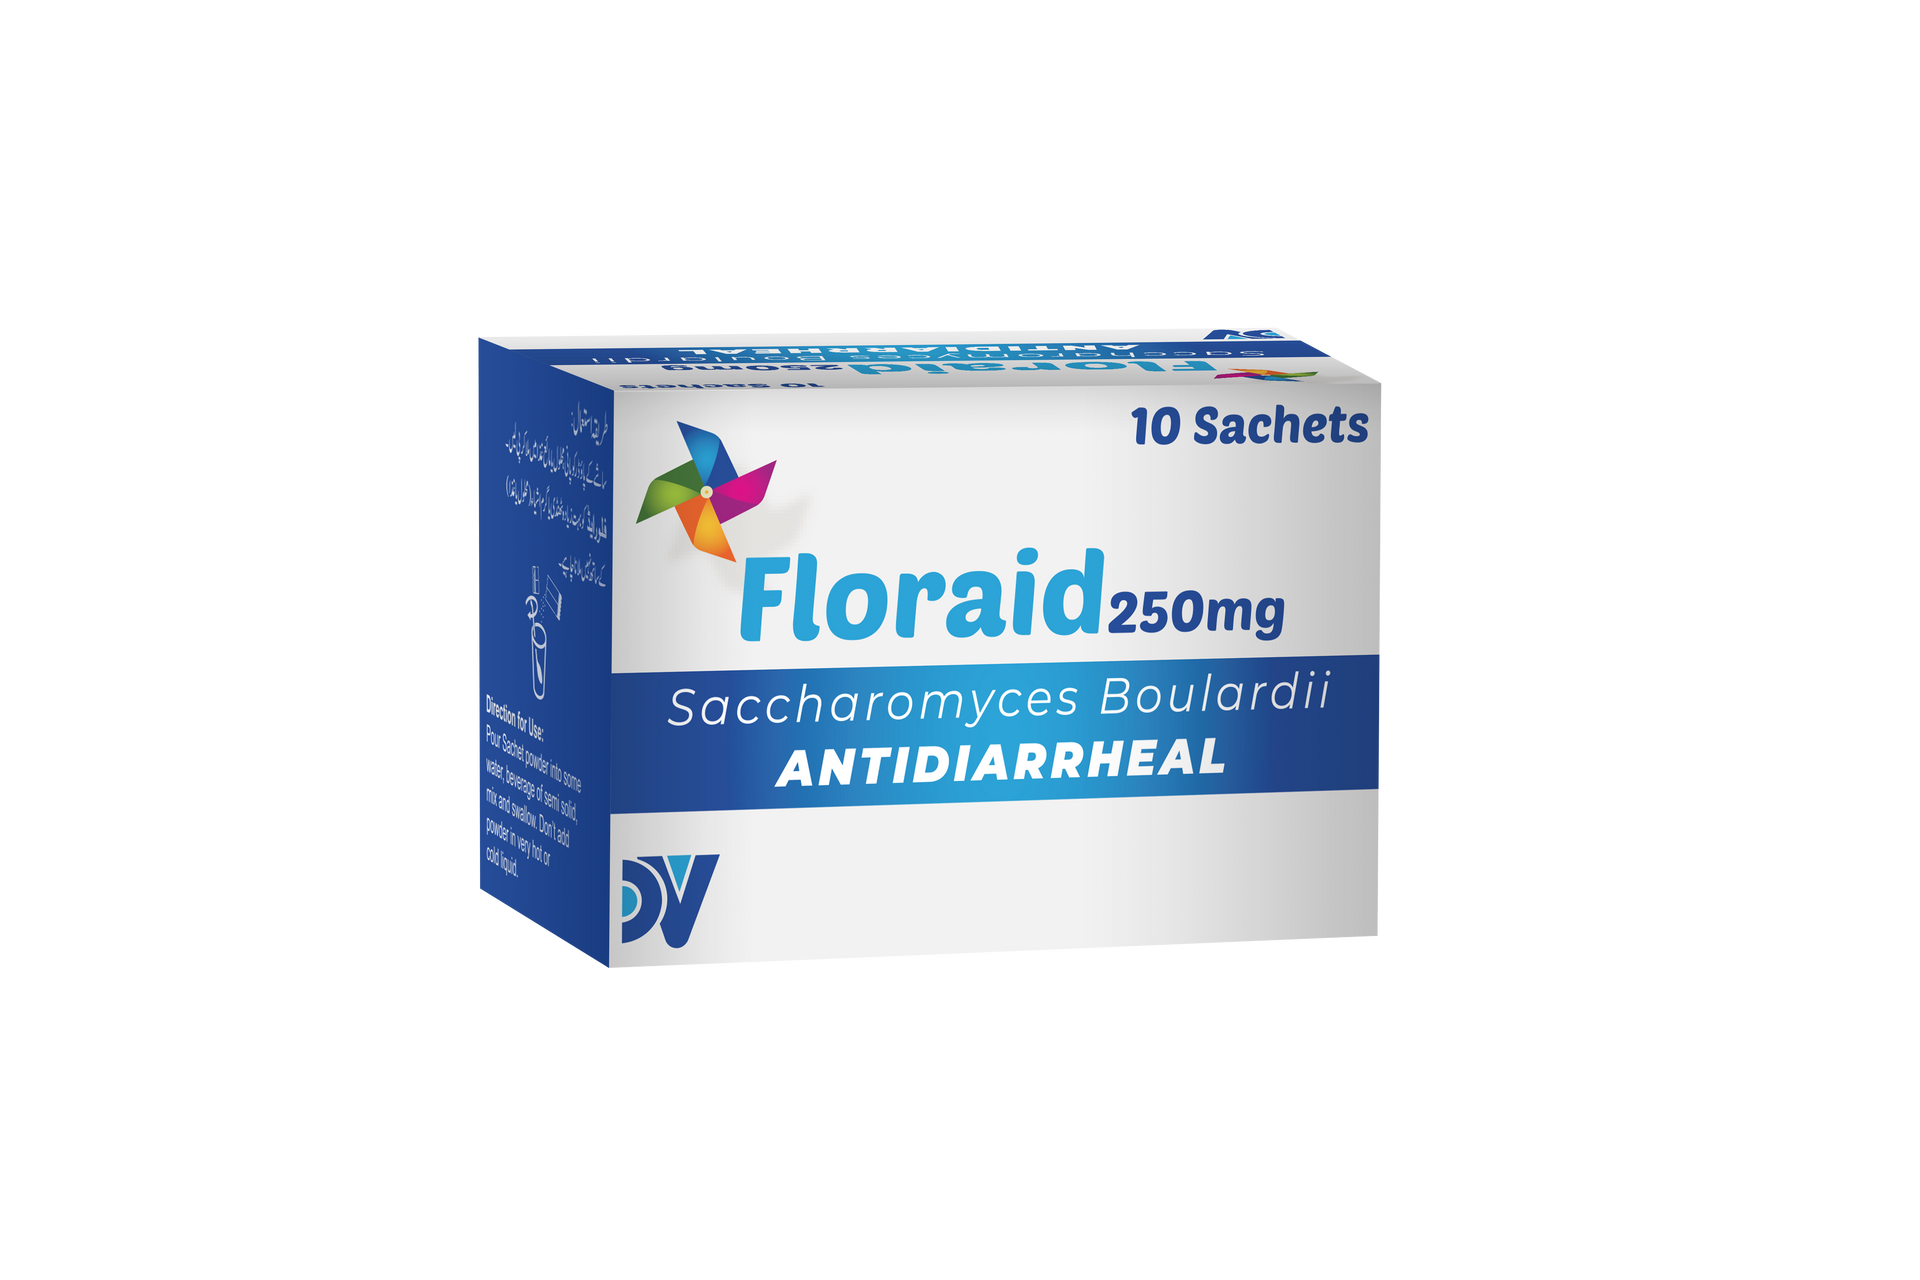 Floraid - Saccharomyces boulardii - Antidiarrheal 250mg